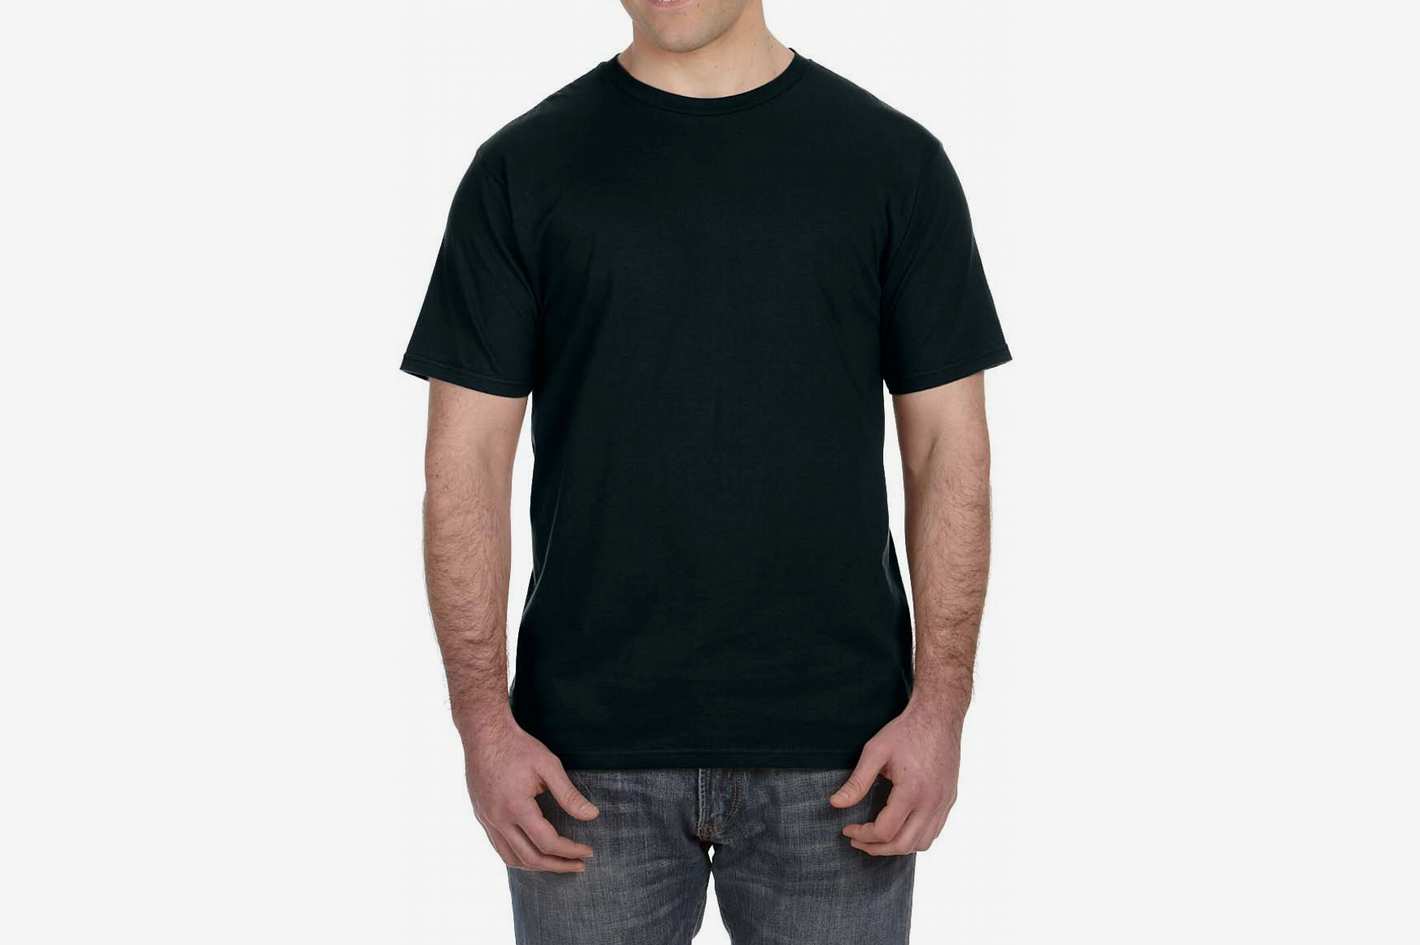 18 Best Black T-shirts for Men 2019